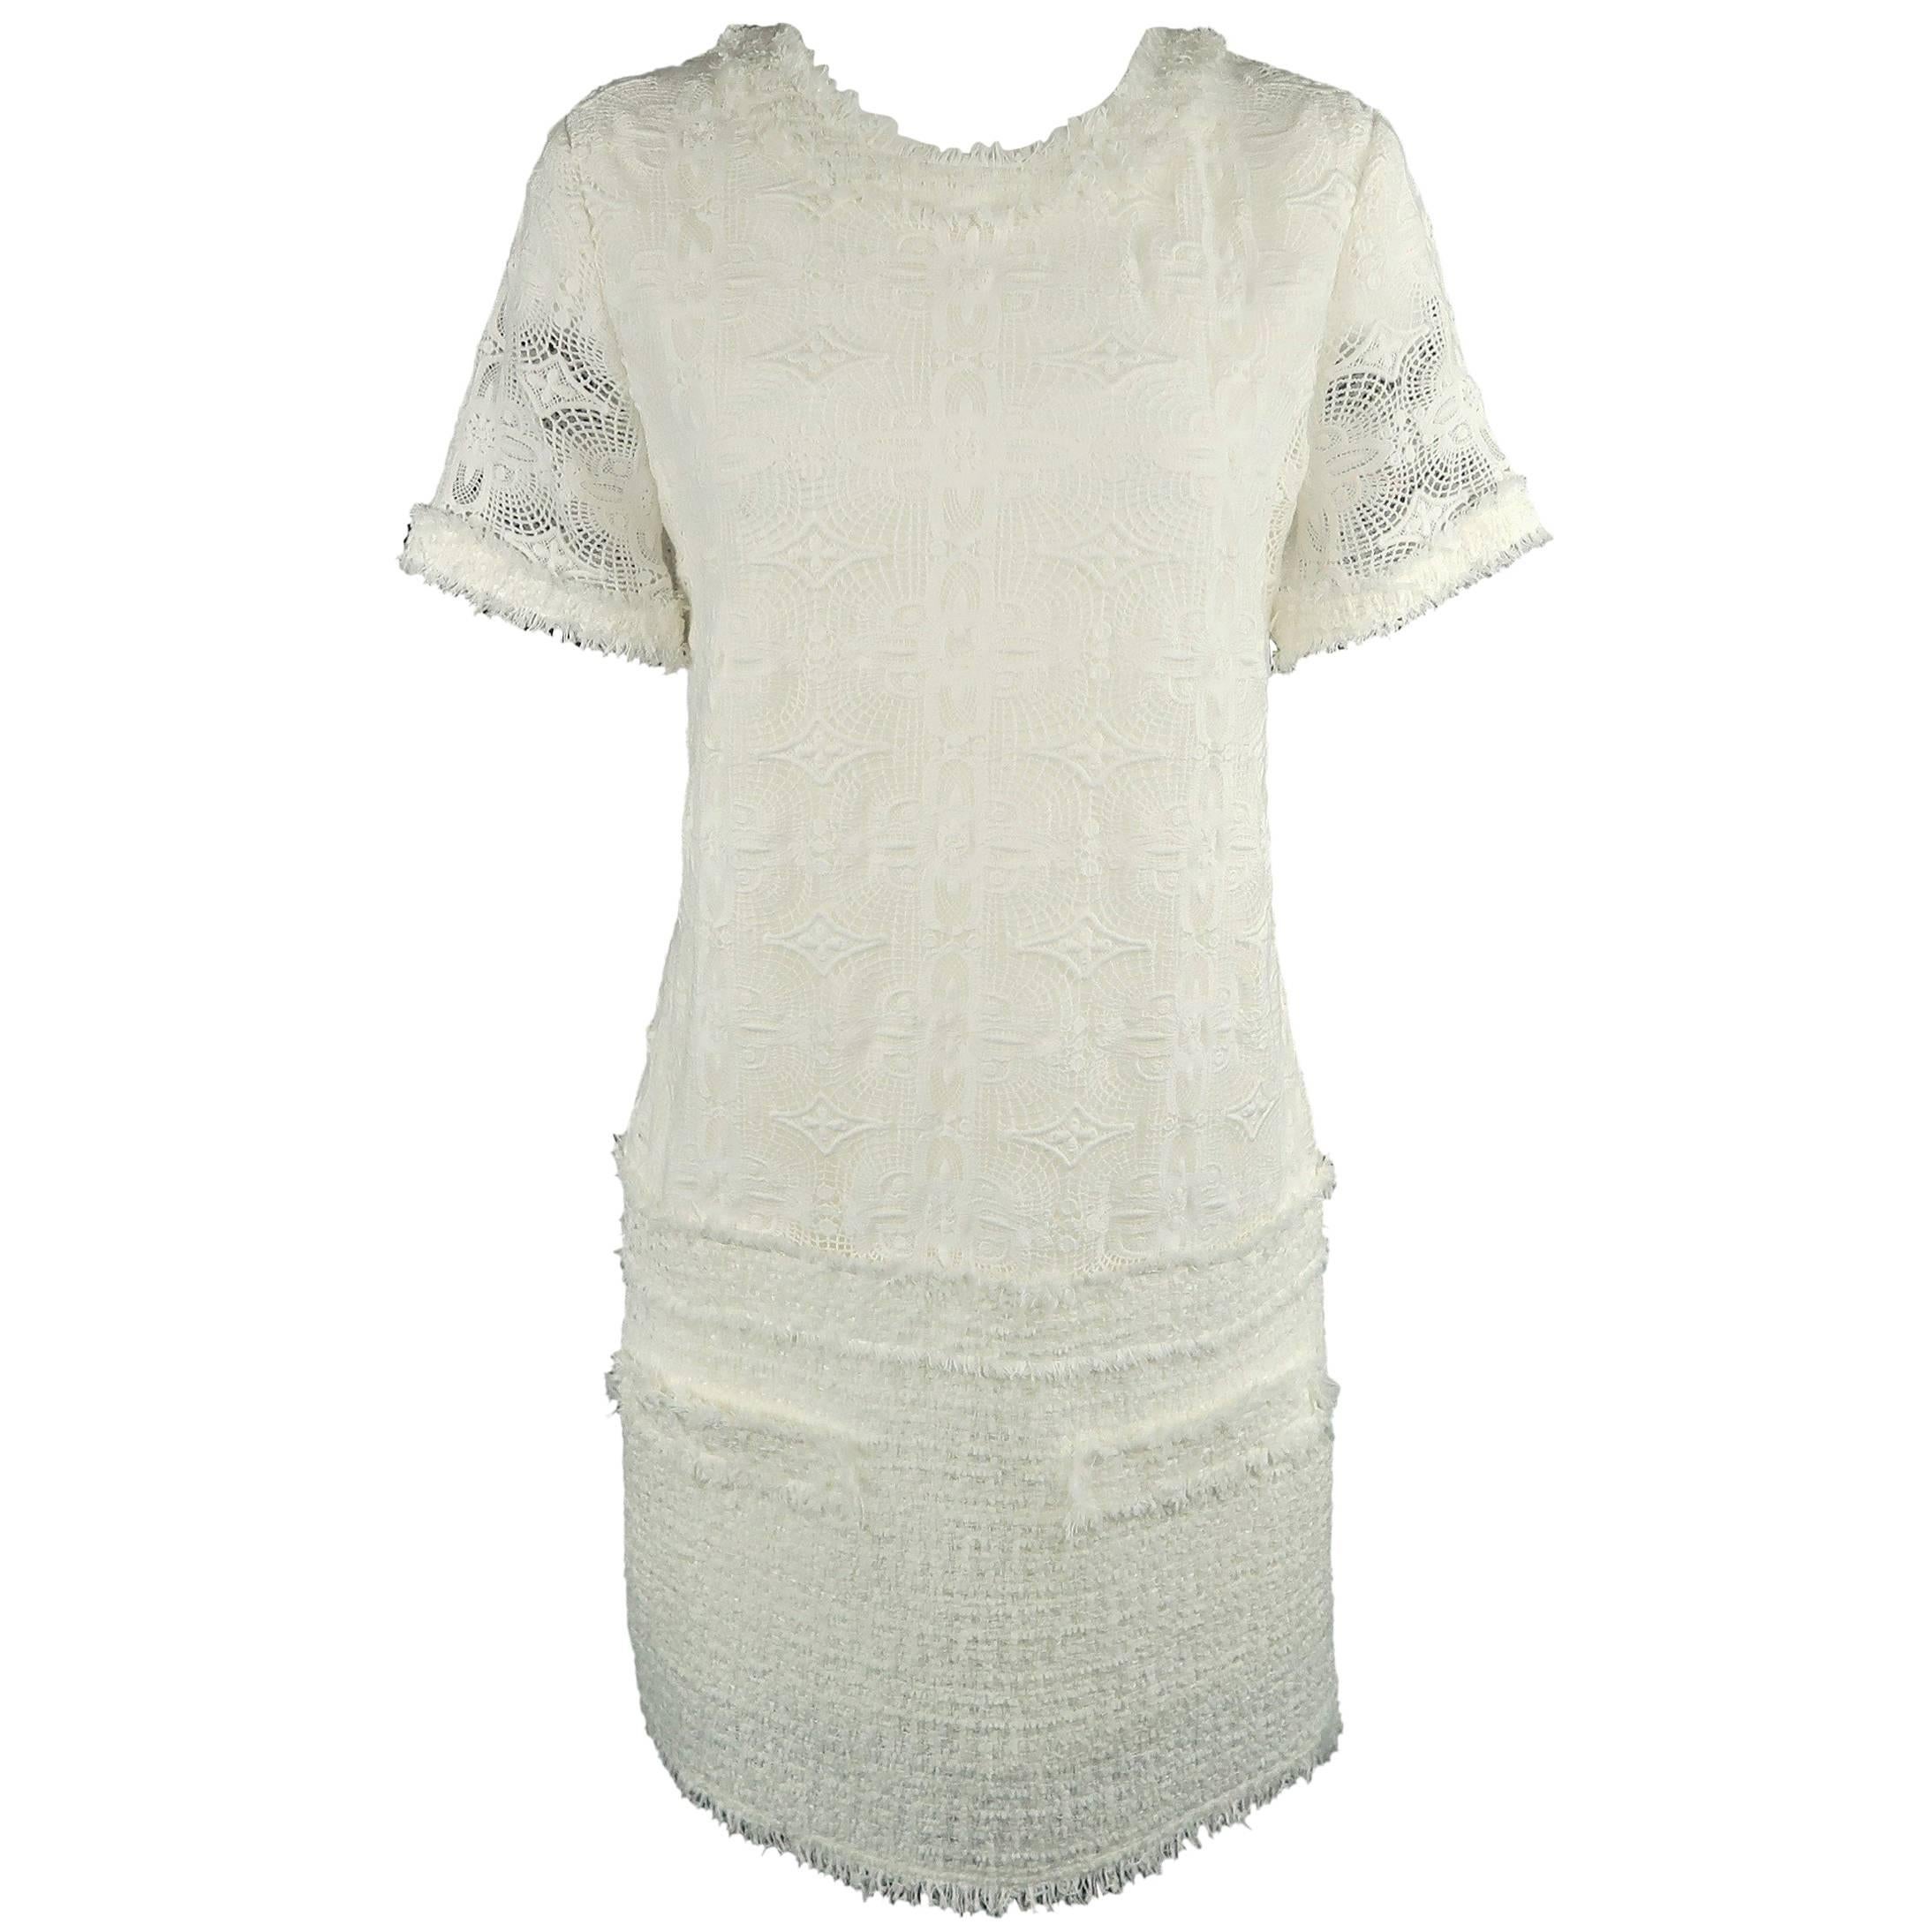 RACHEL ZOE Size 6 White Cotton Lace Drop Tweed Waist Dress